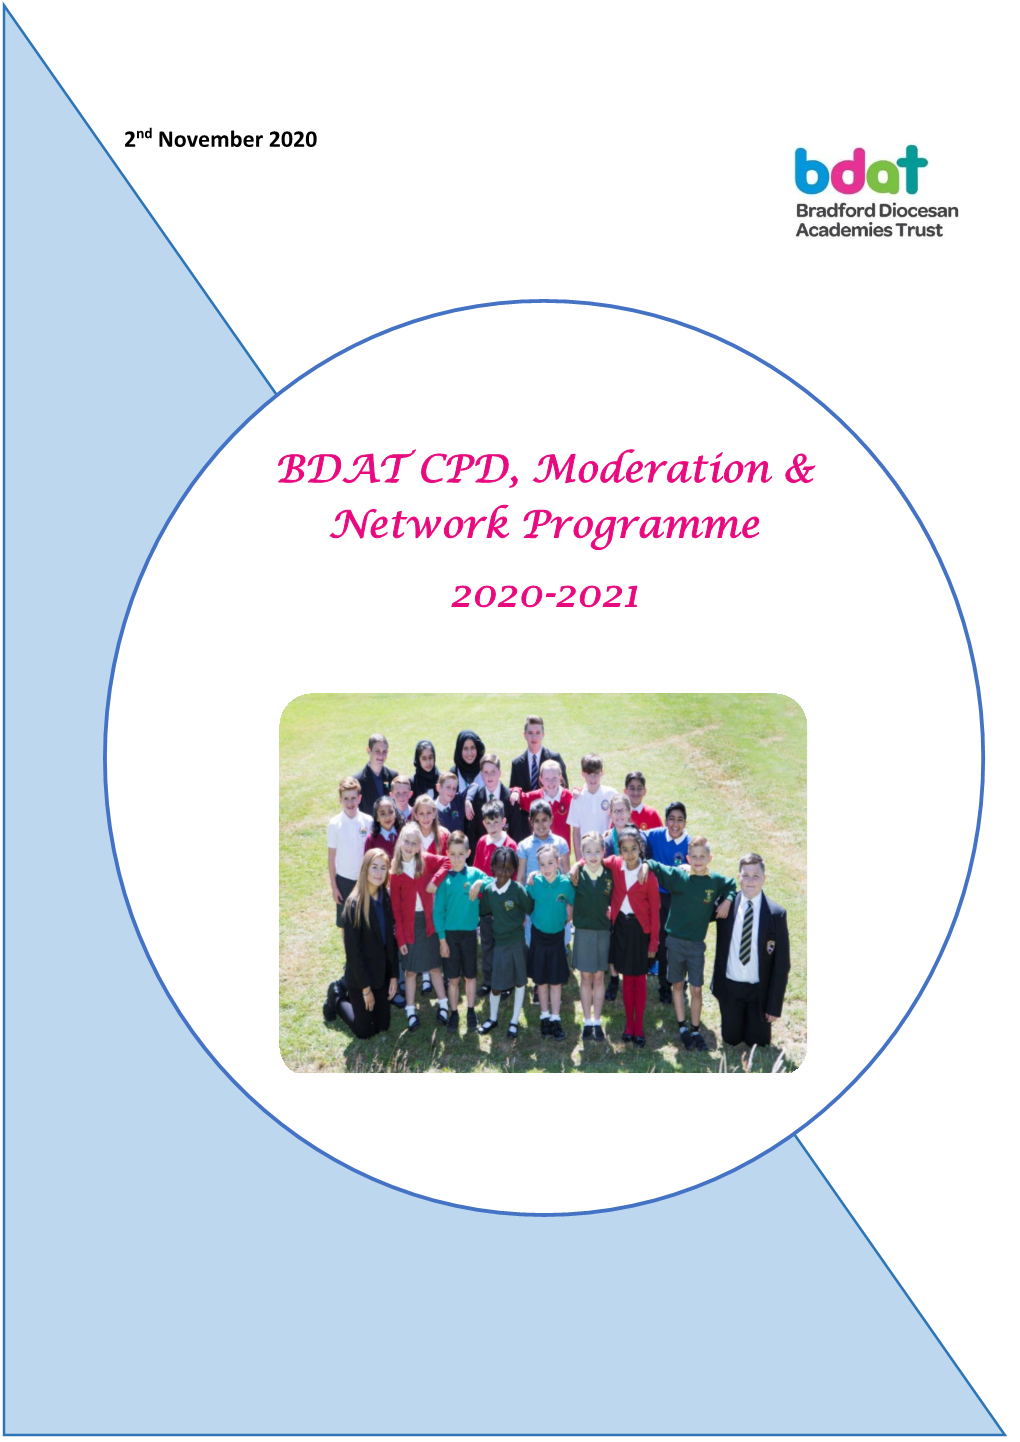 BDAT CPD, Moderation & Network Programme 2020-2021